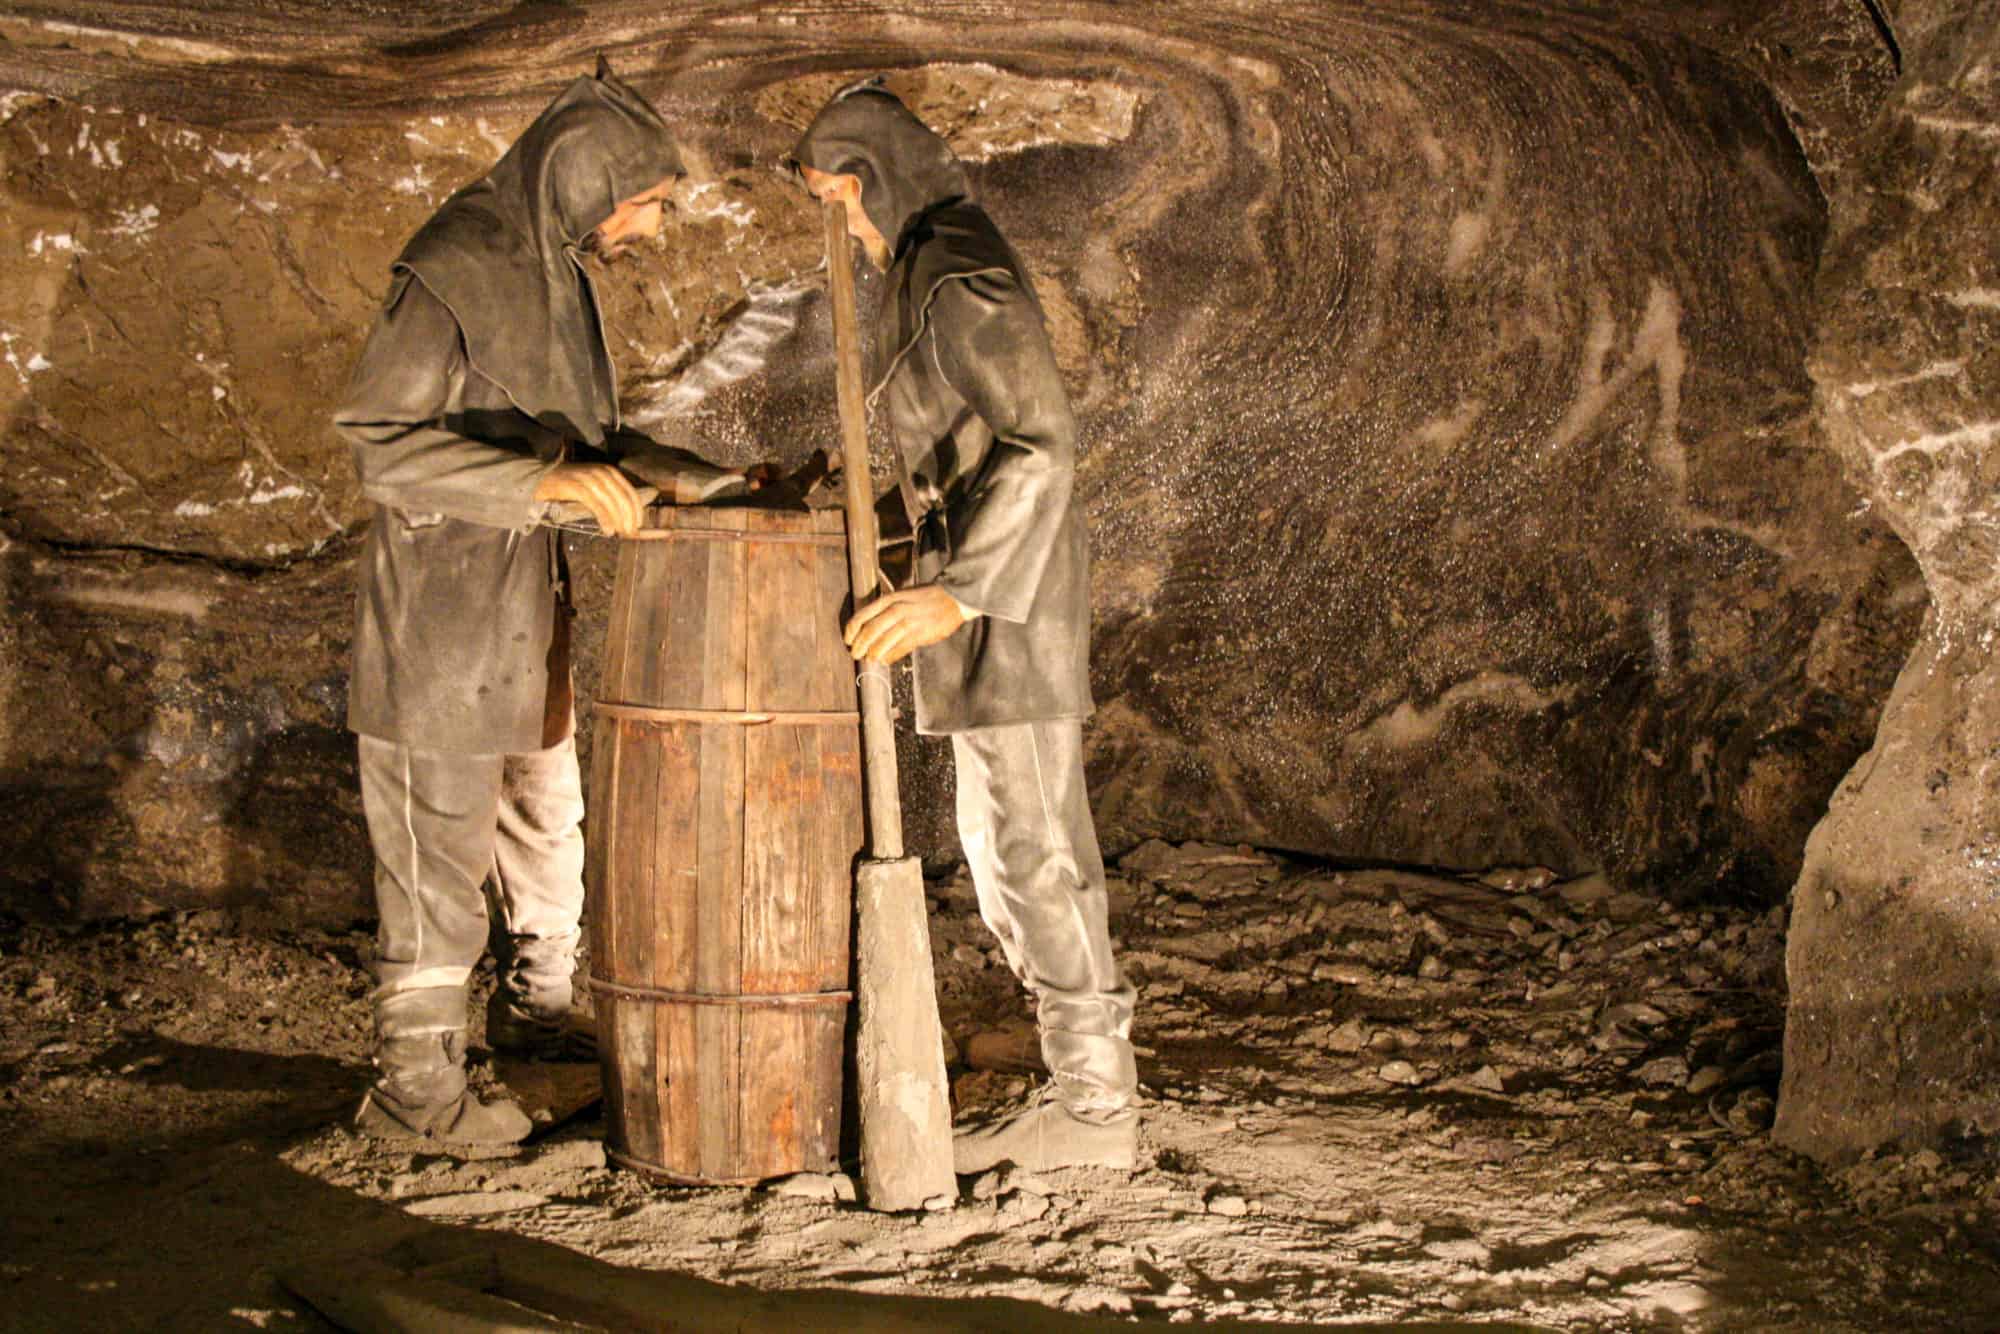 Wieliczka Salt Mine near Krakow - statue of two men working in the salt mine